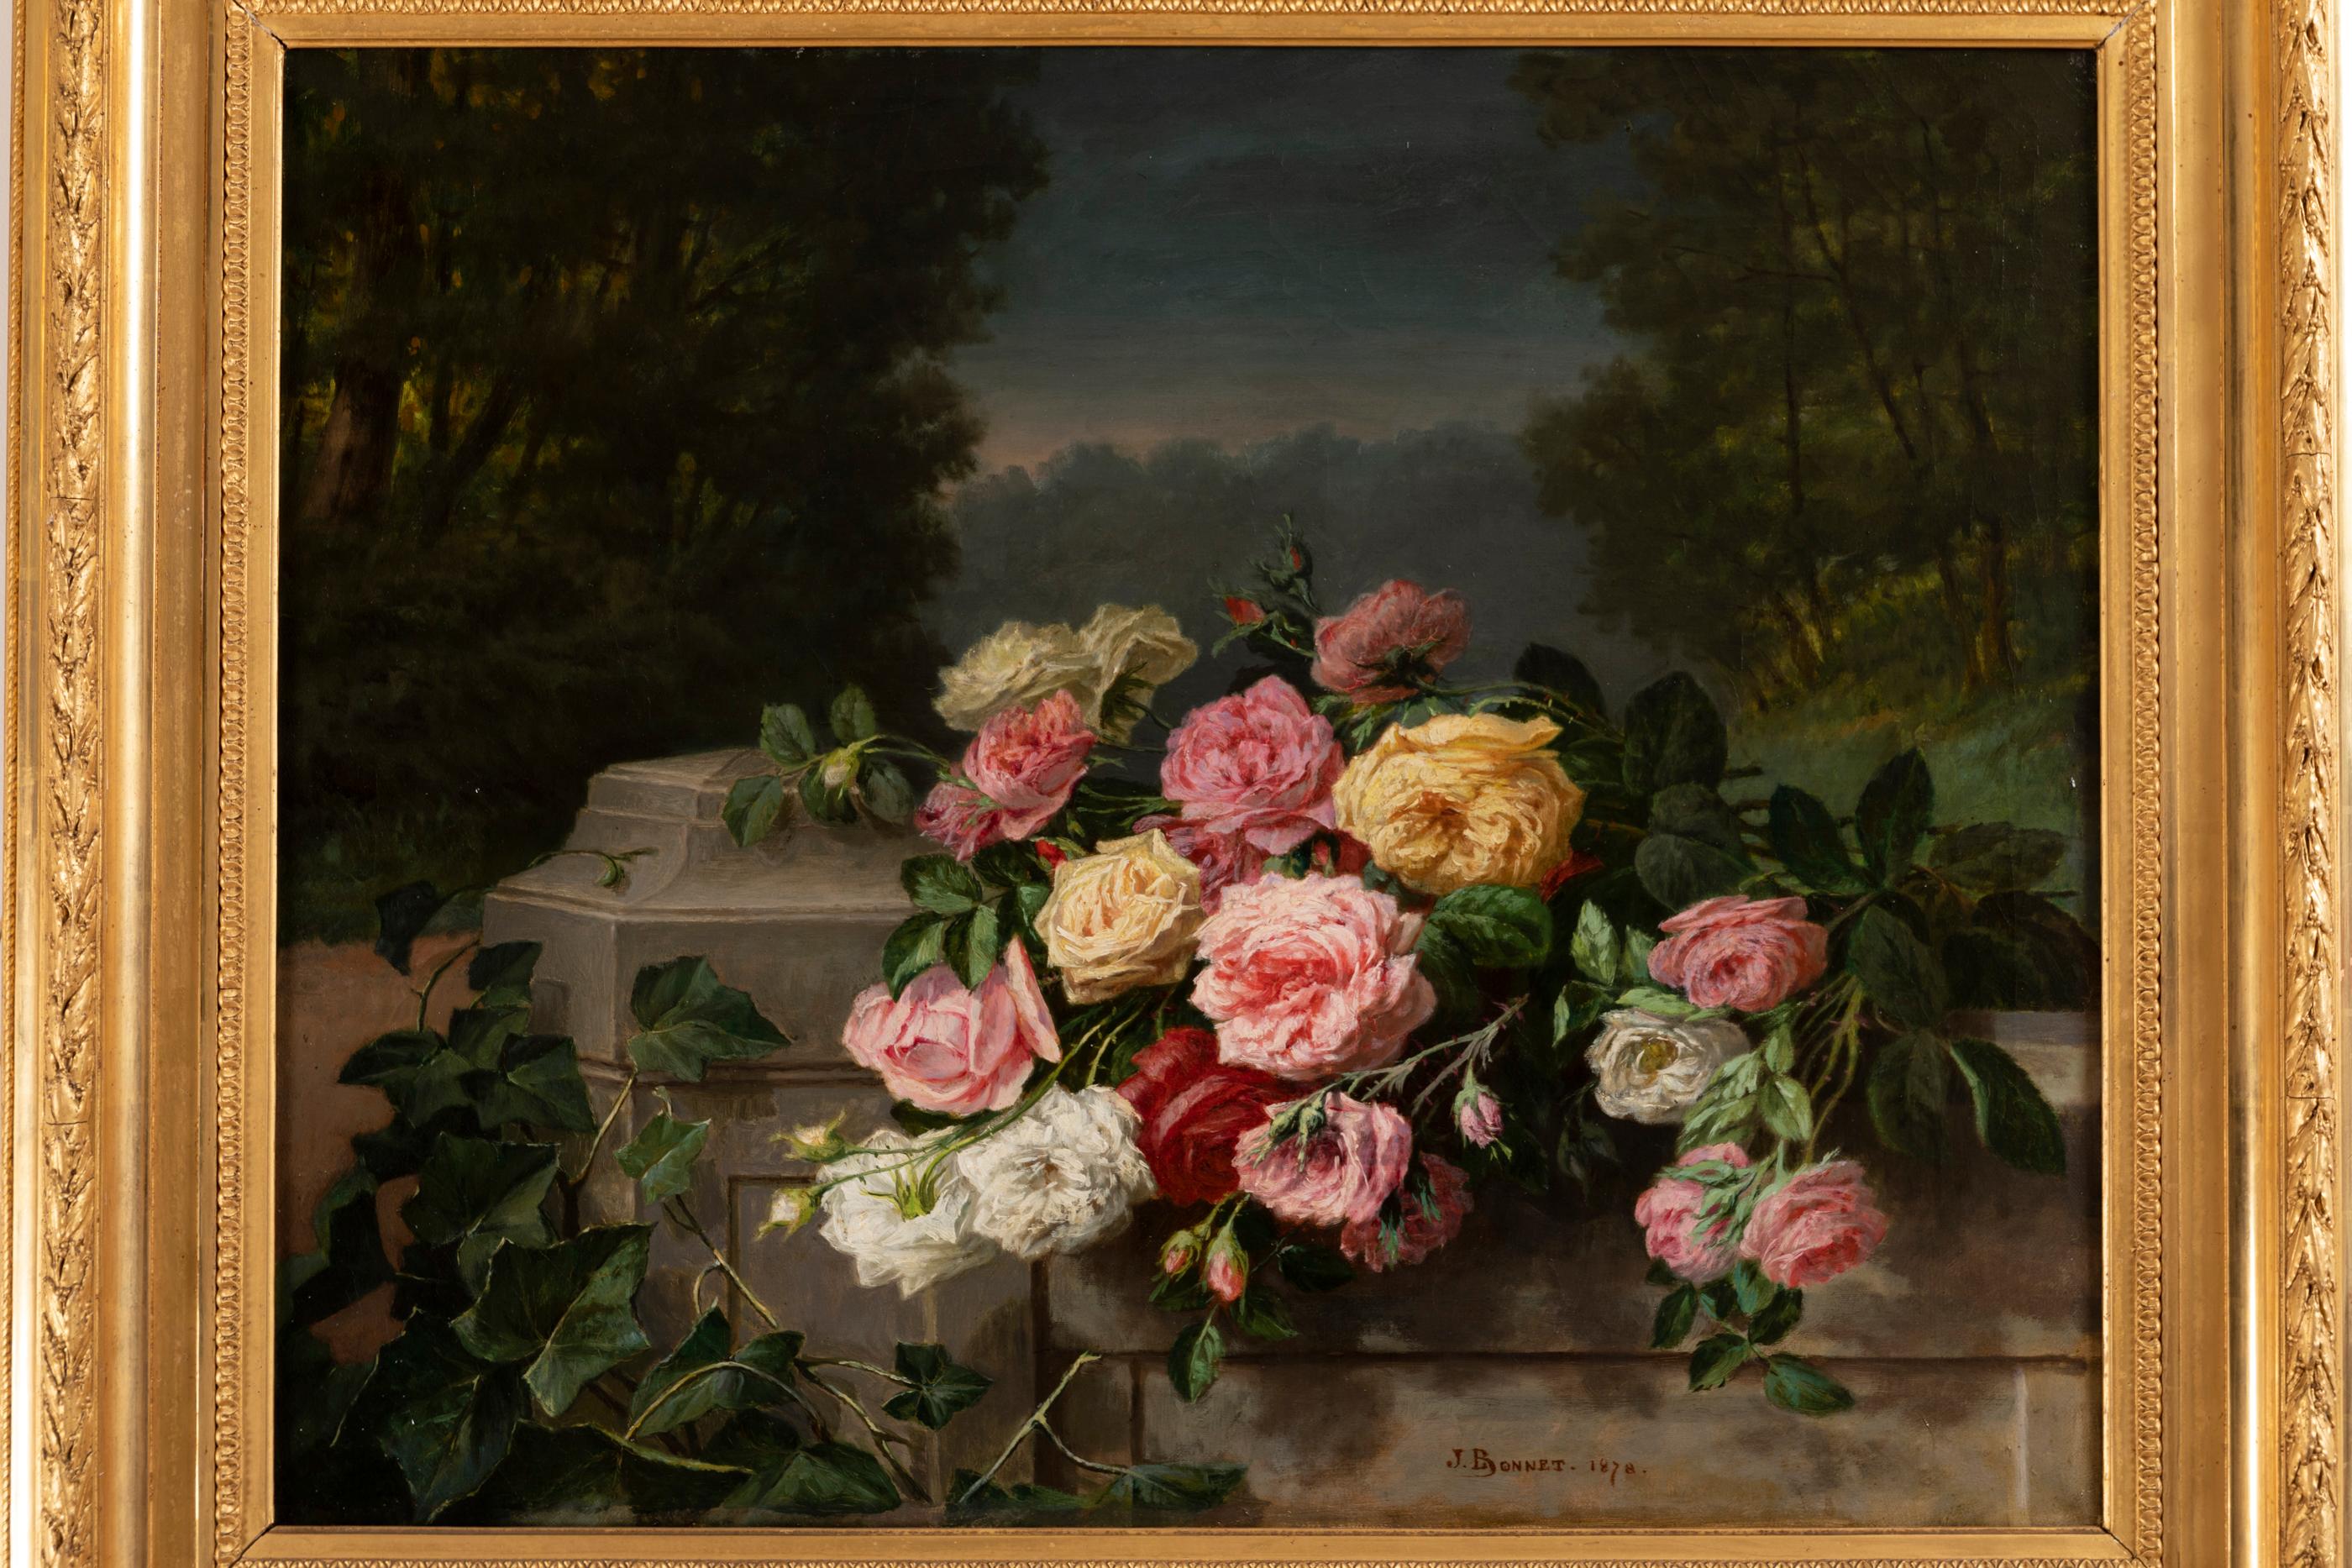 Still Life of Thrown Roses - Jean Bonnet 1878
Jean Bonnet (19th-20th century)
